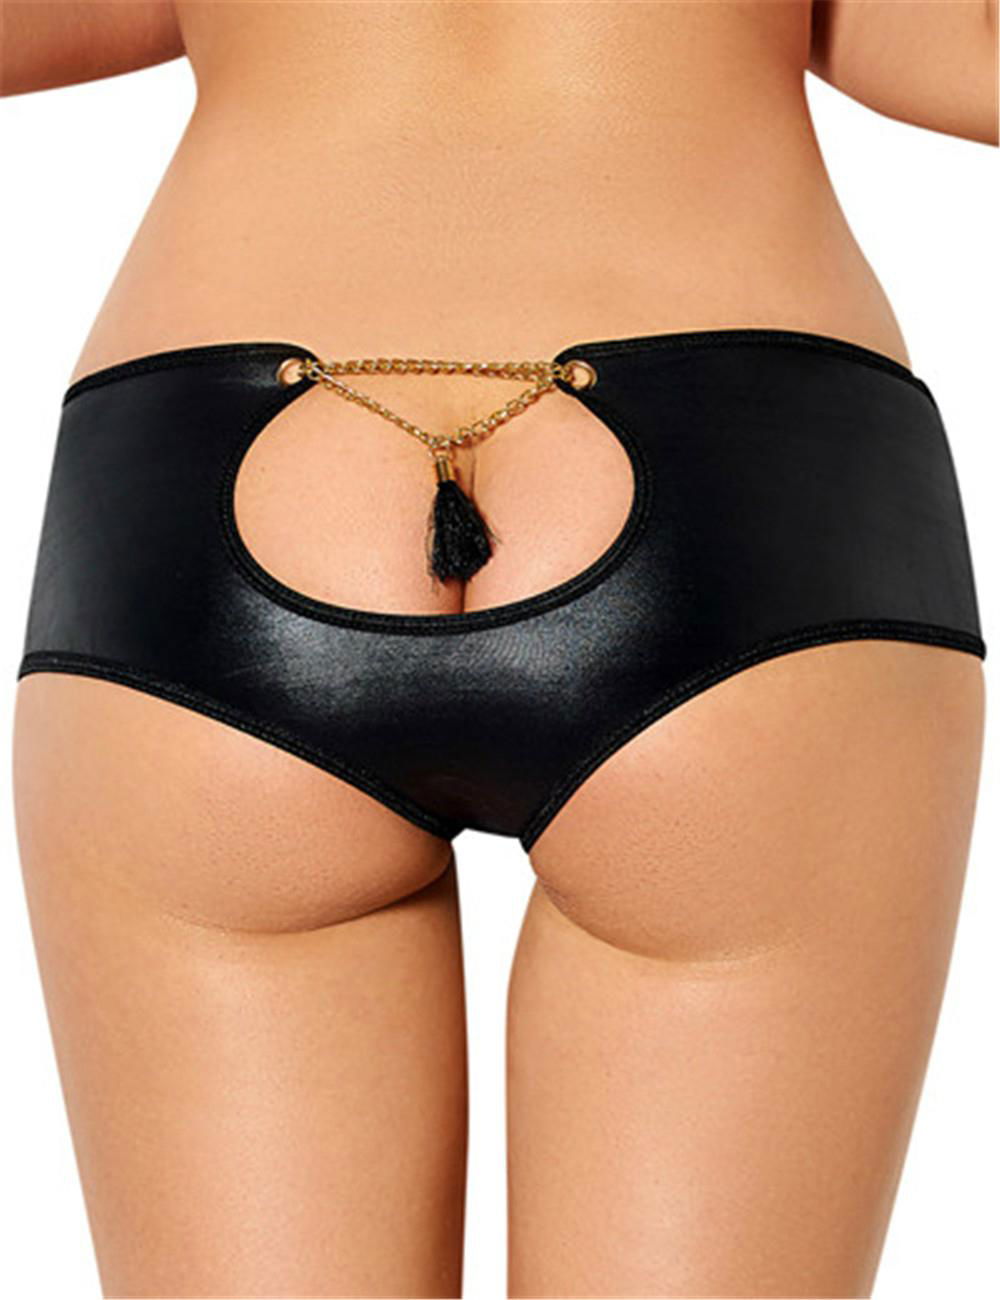 2016 hot open sexy black panty for girls underwear 2